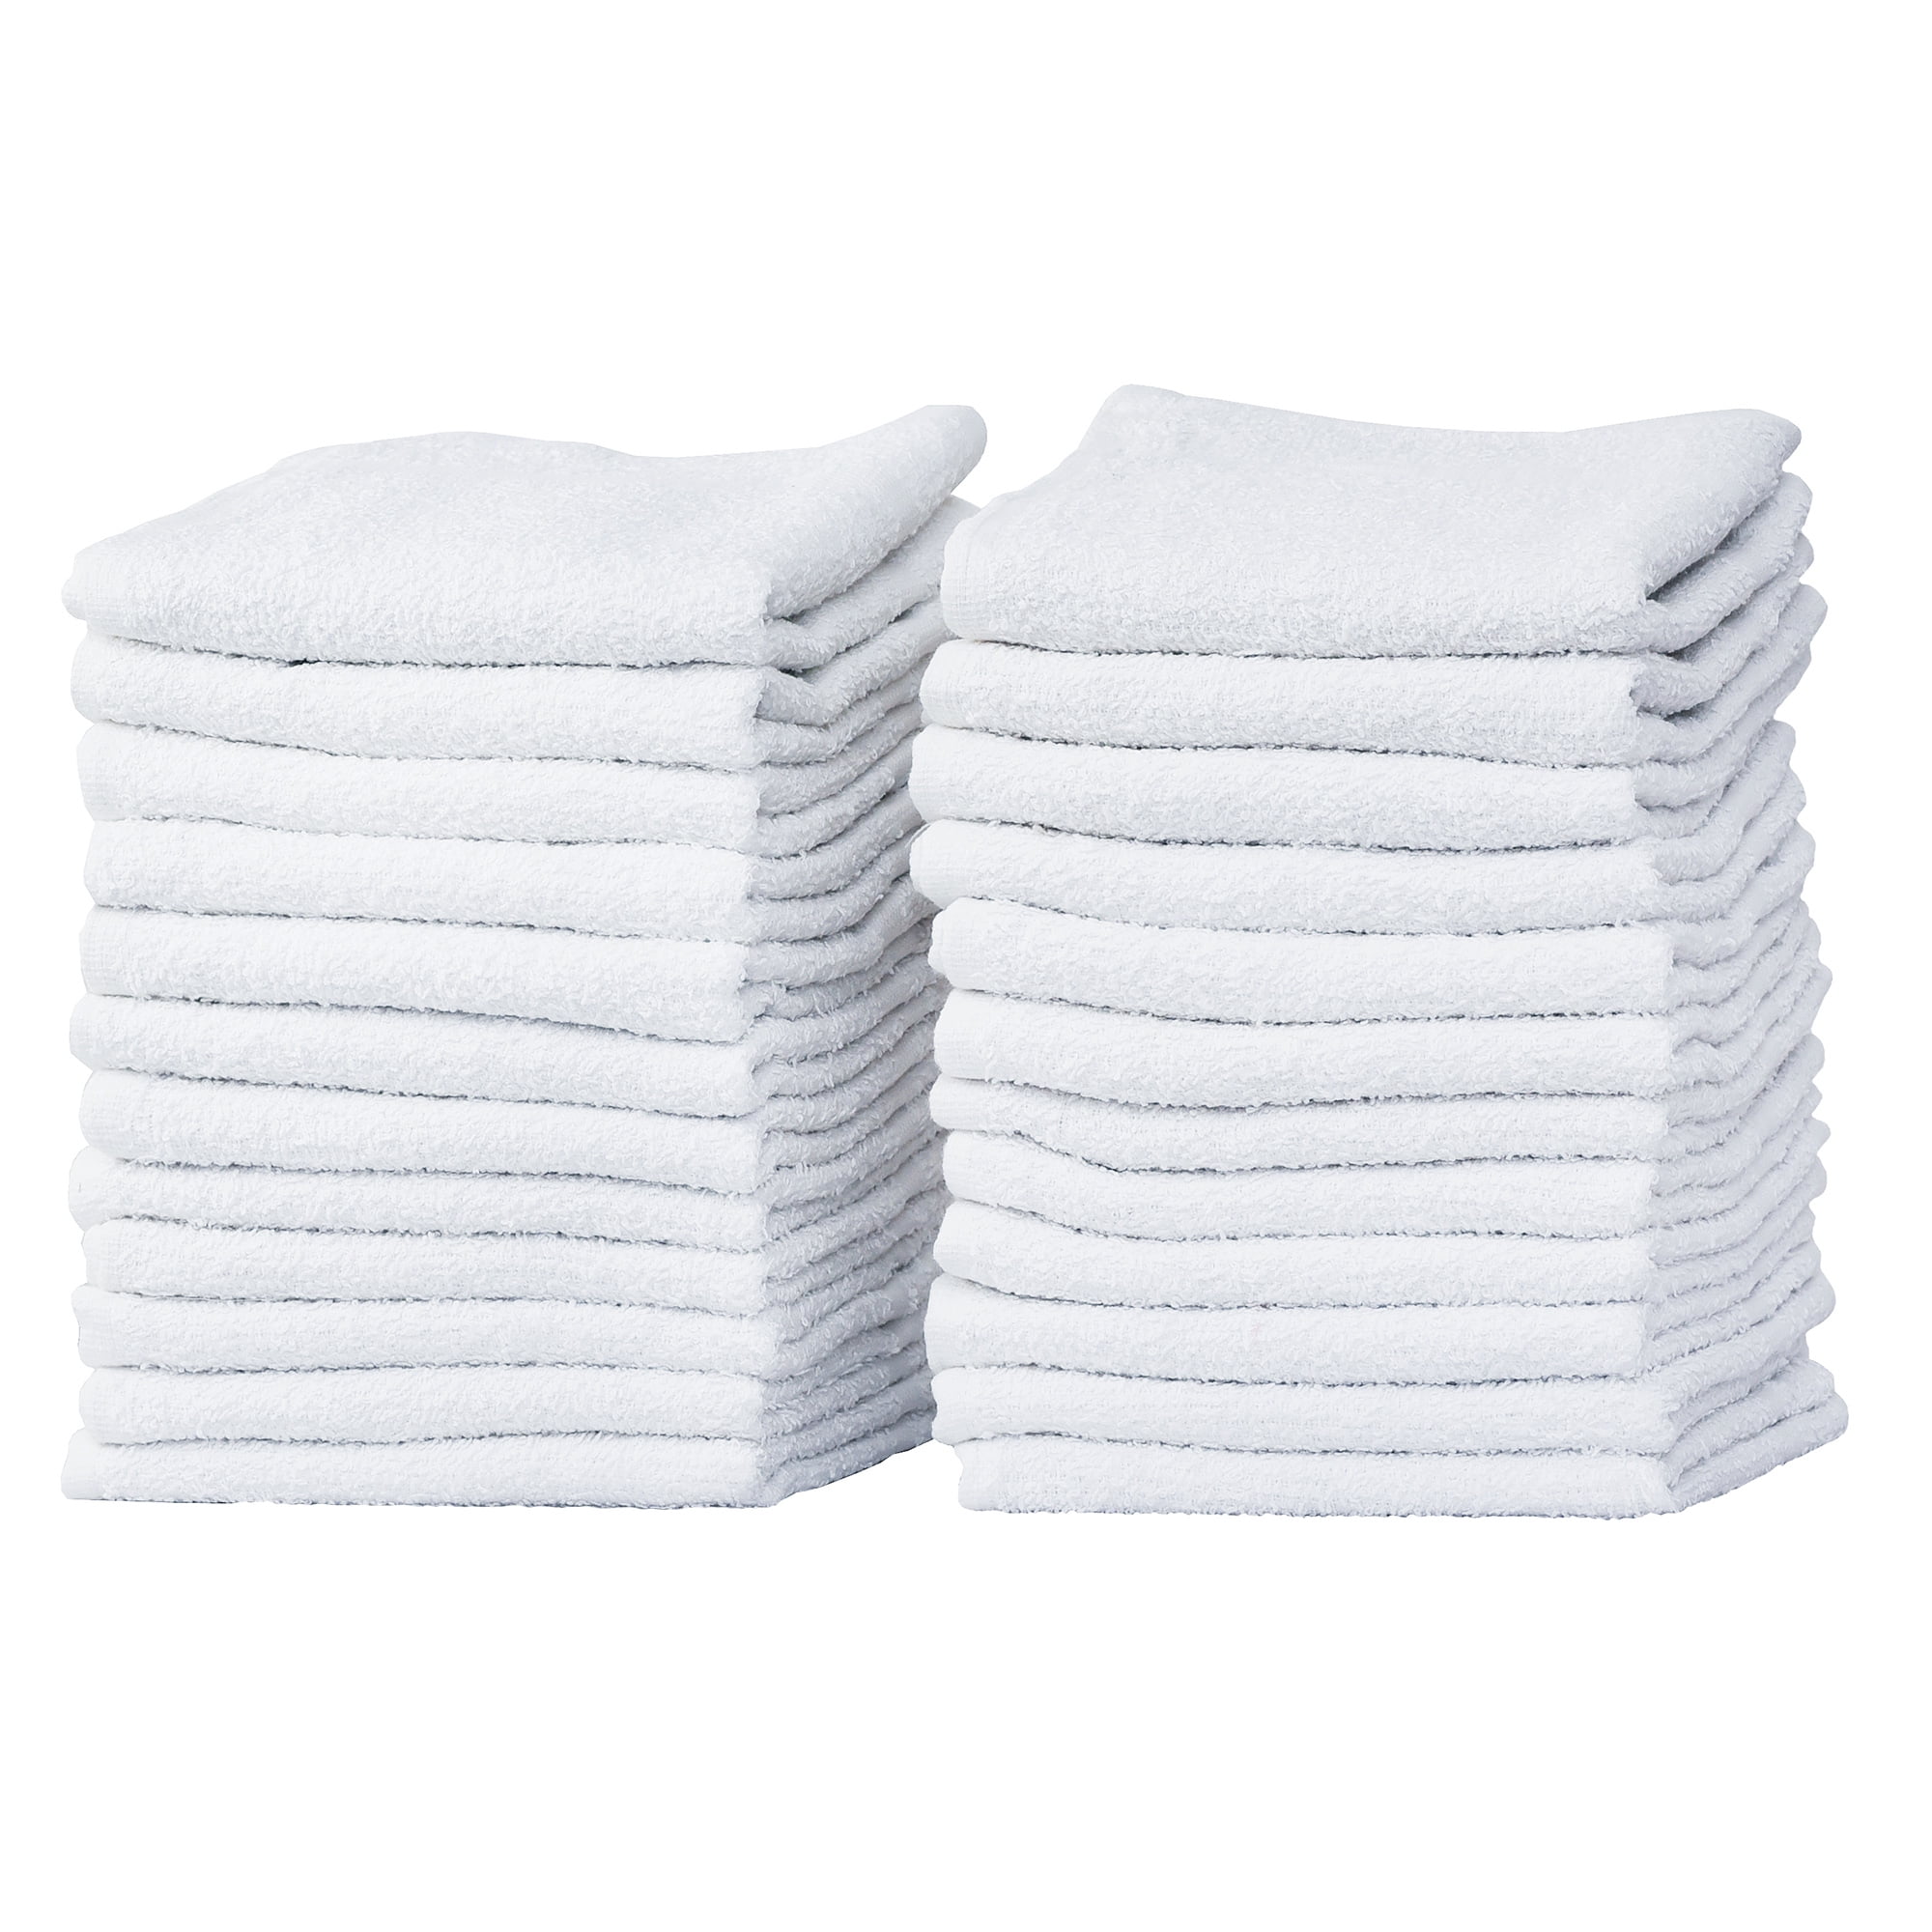 10 dozen white 100% cotton wash cloths 12x12 hotel washcloth grade bulk lot 